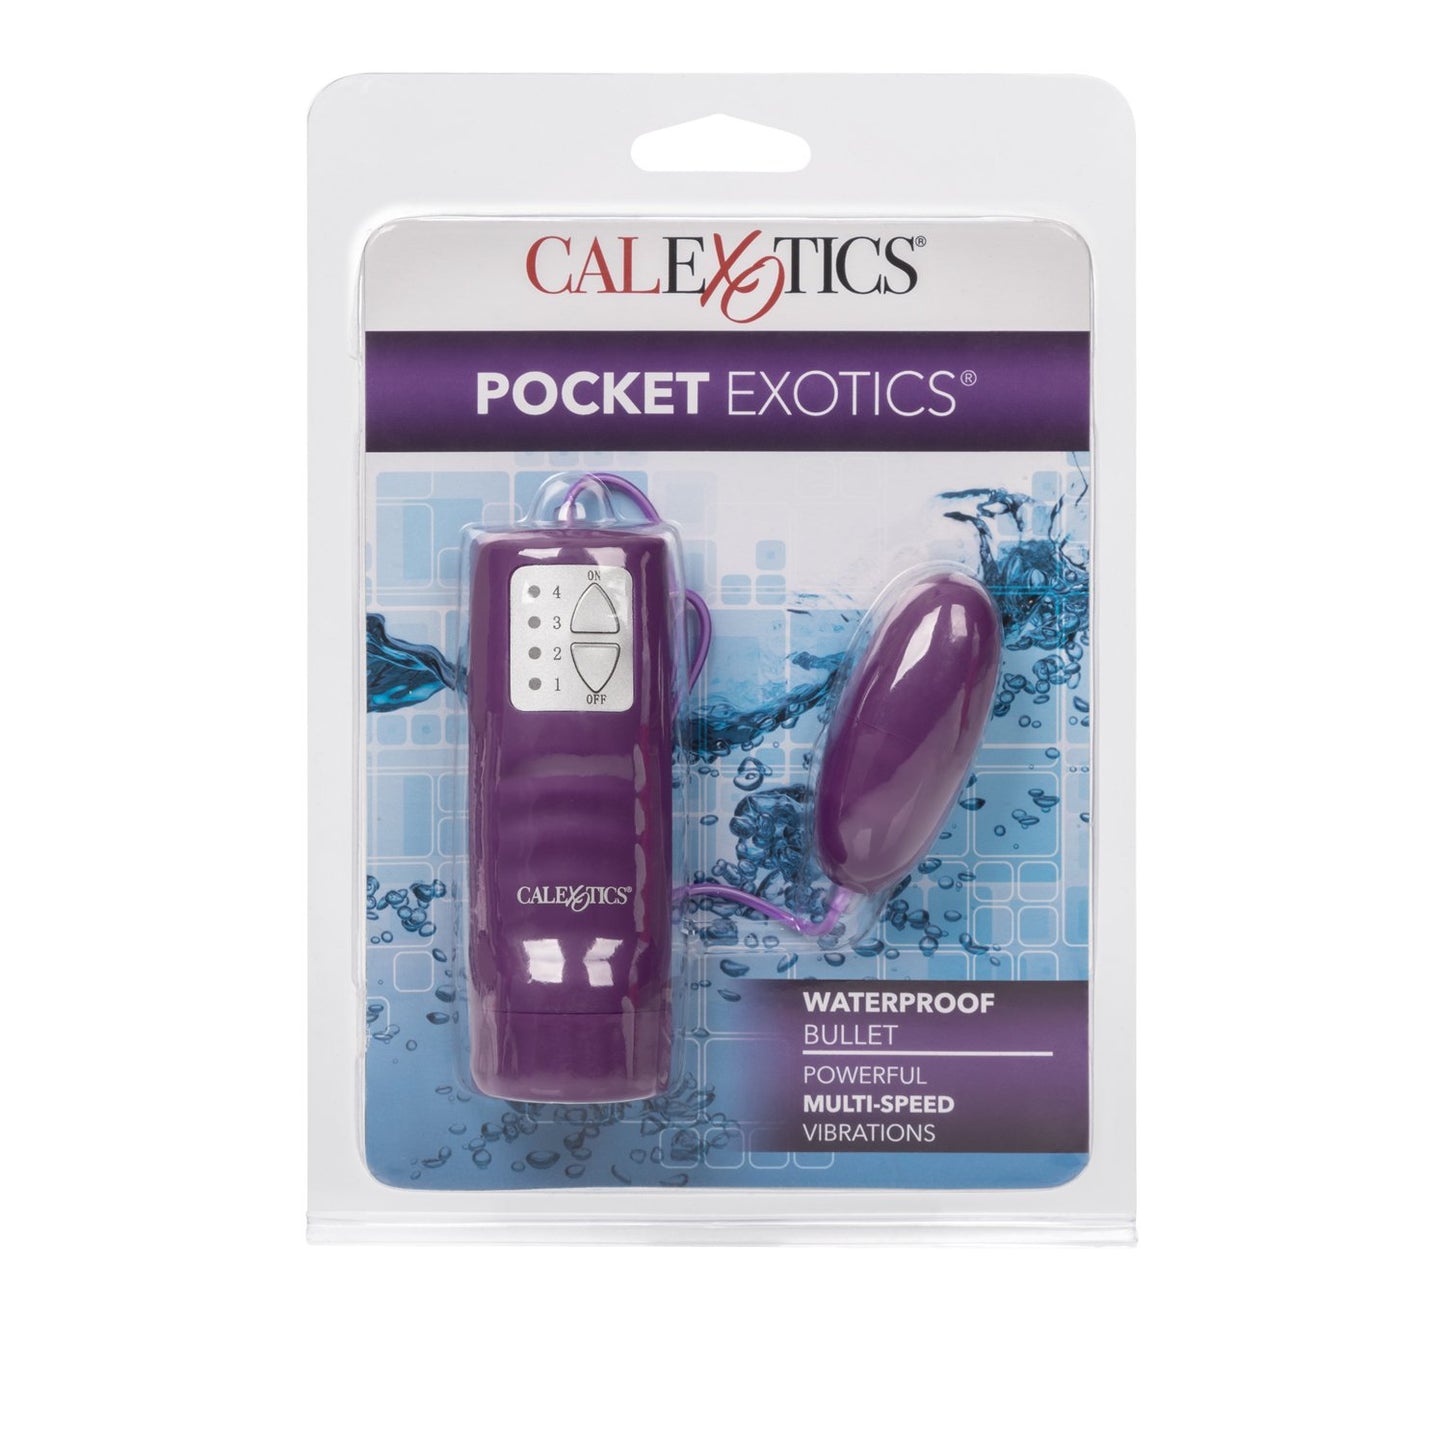 Pocket Exotics Waterproof Bullet